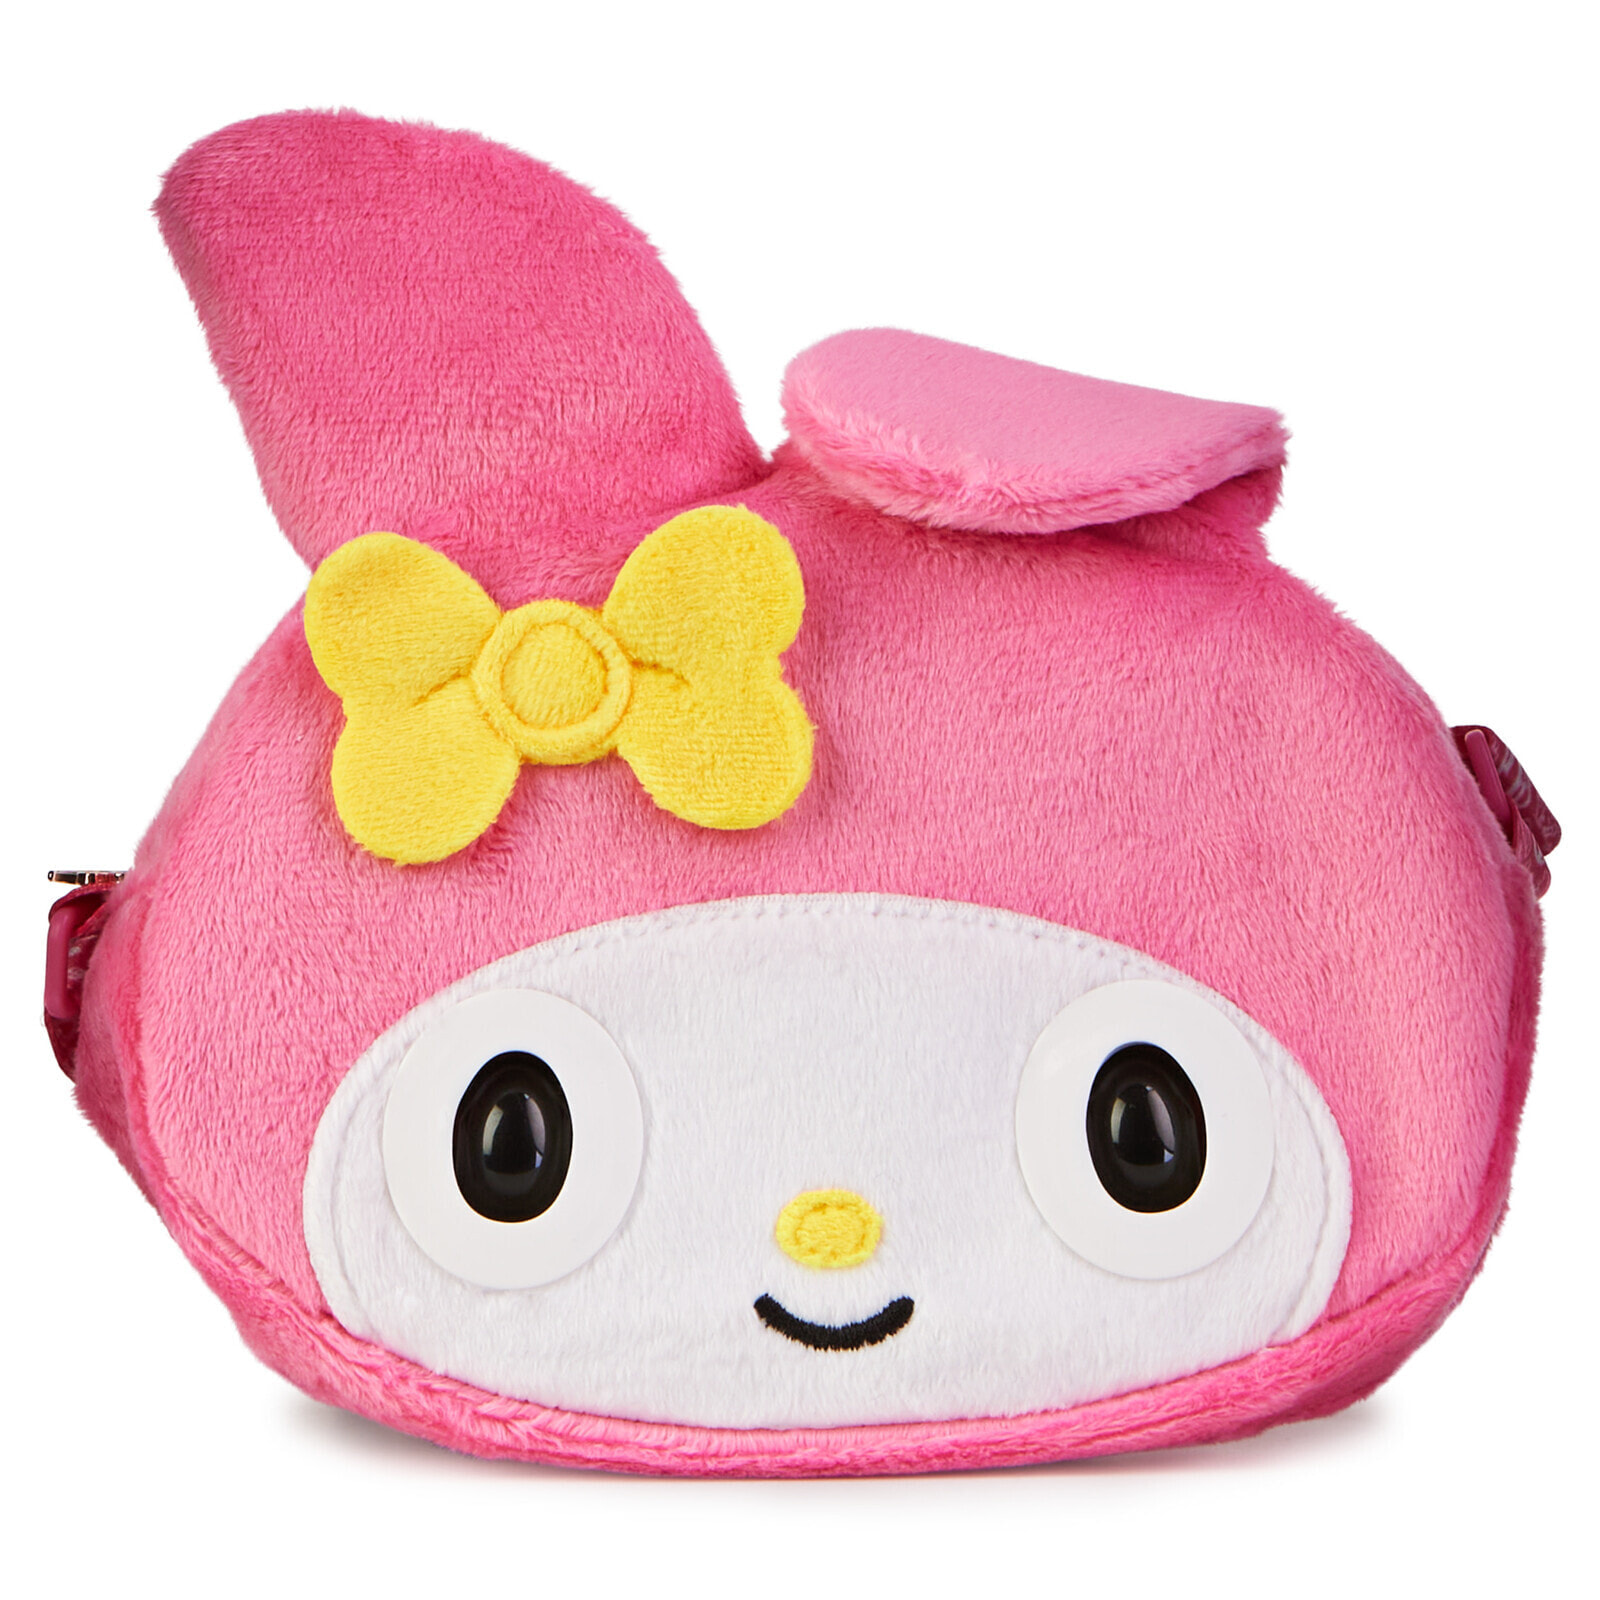 Purse Pets Sanrio Hello Kitty and Friends 6065145